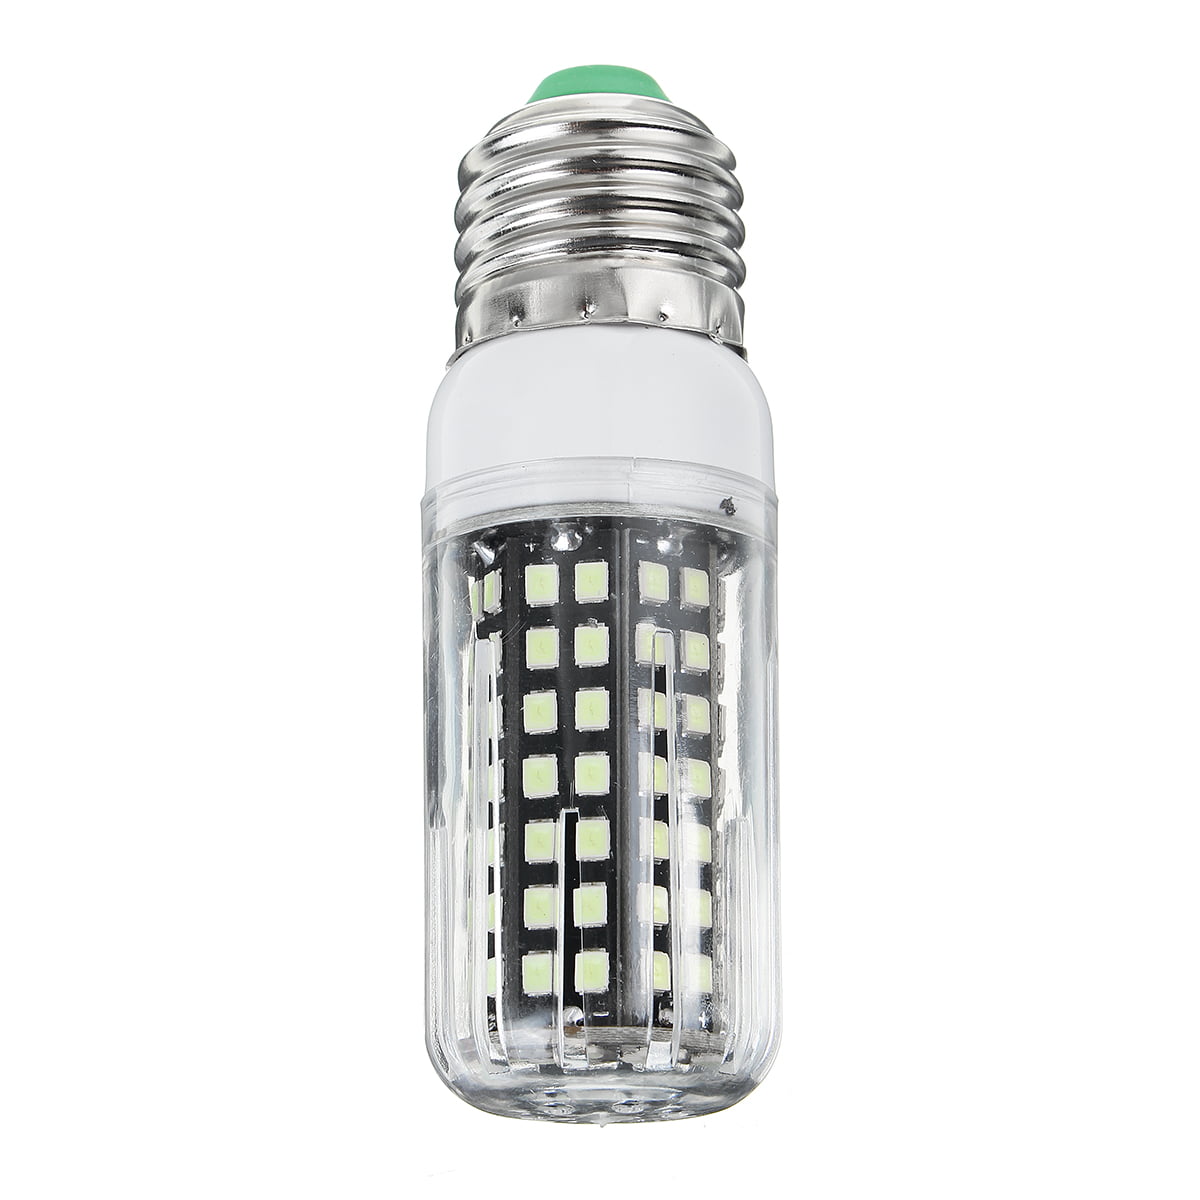 UV Germicidal Sterilizer Lamp LED UVC Home E27/E14 Ozone Disinfection Light Bulb 